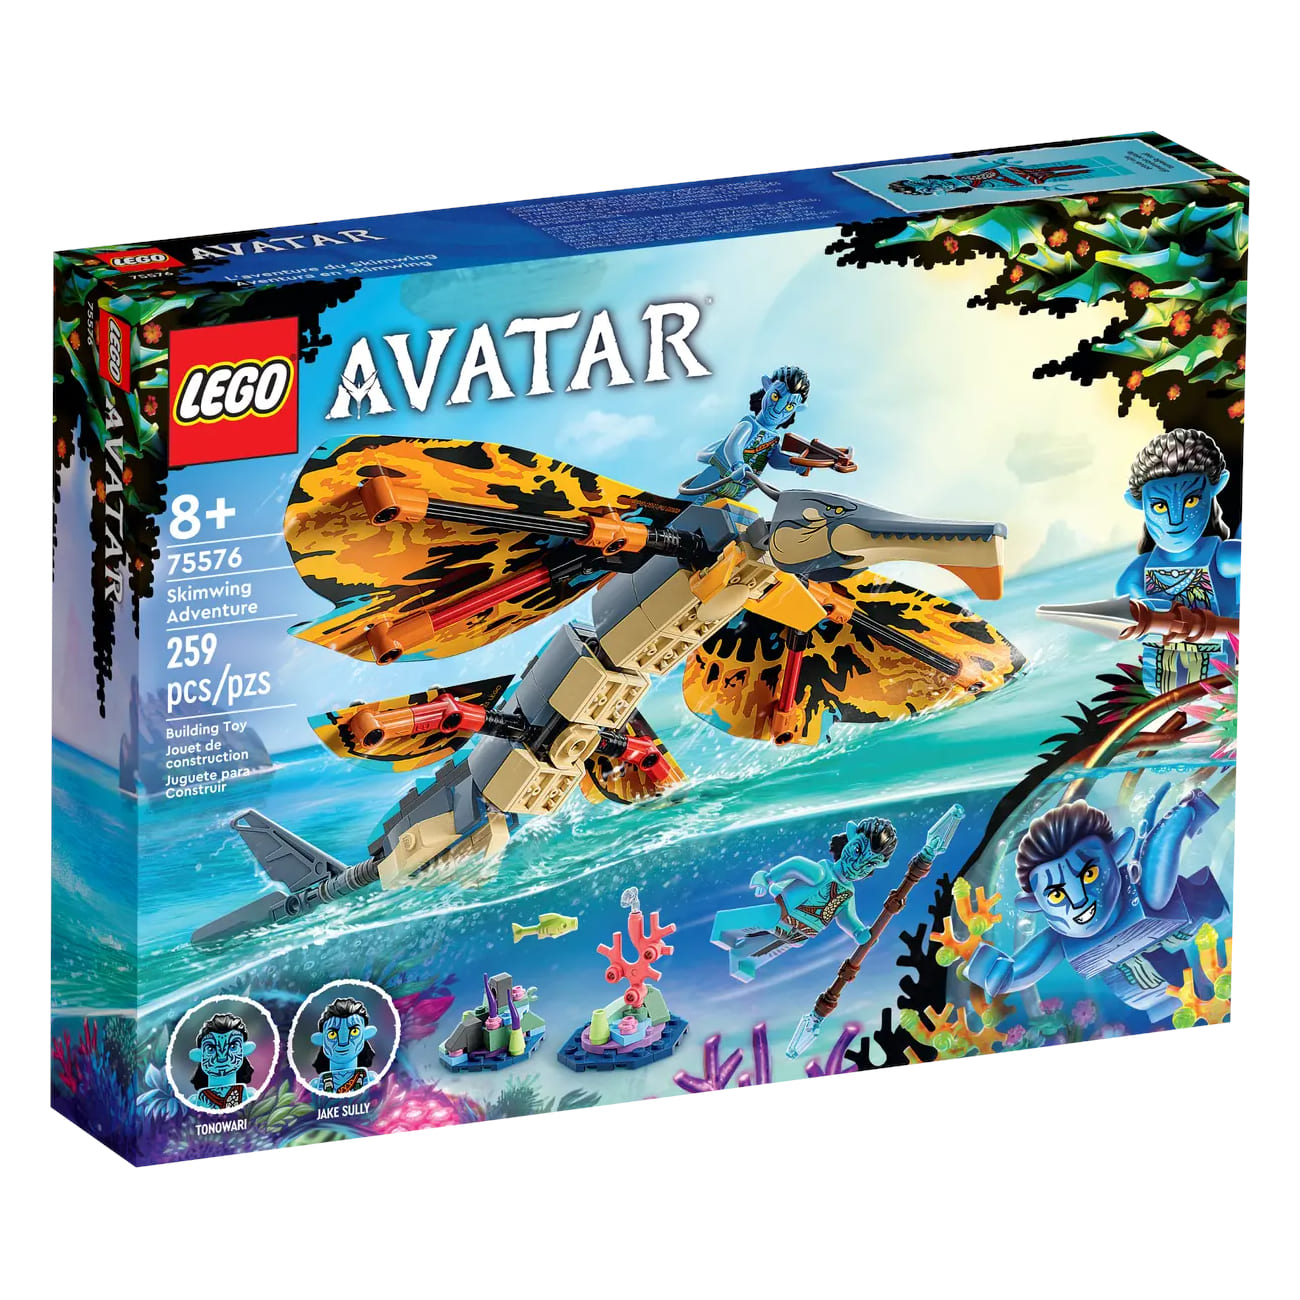 Конструктор LEGO Avatar Skimwing Adventure 75576, 259 деталей конструктор lego avatar ilu discovery 75575 179 деталей